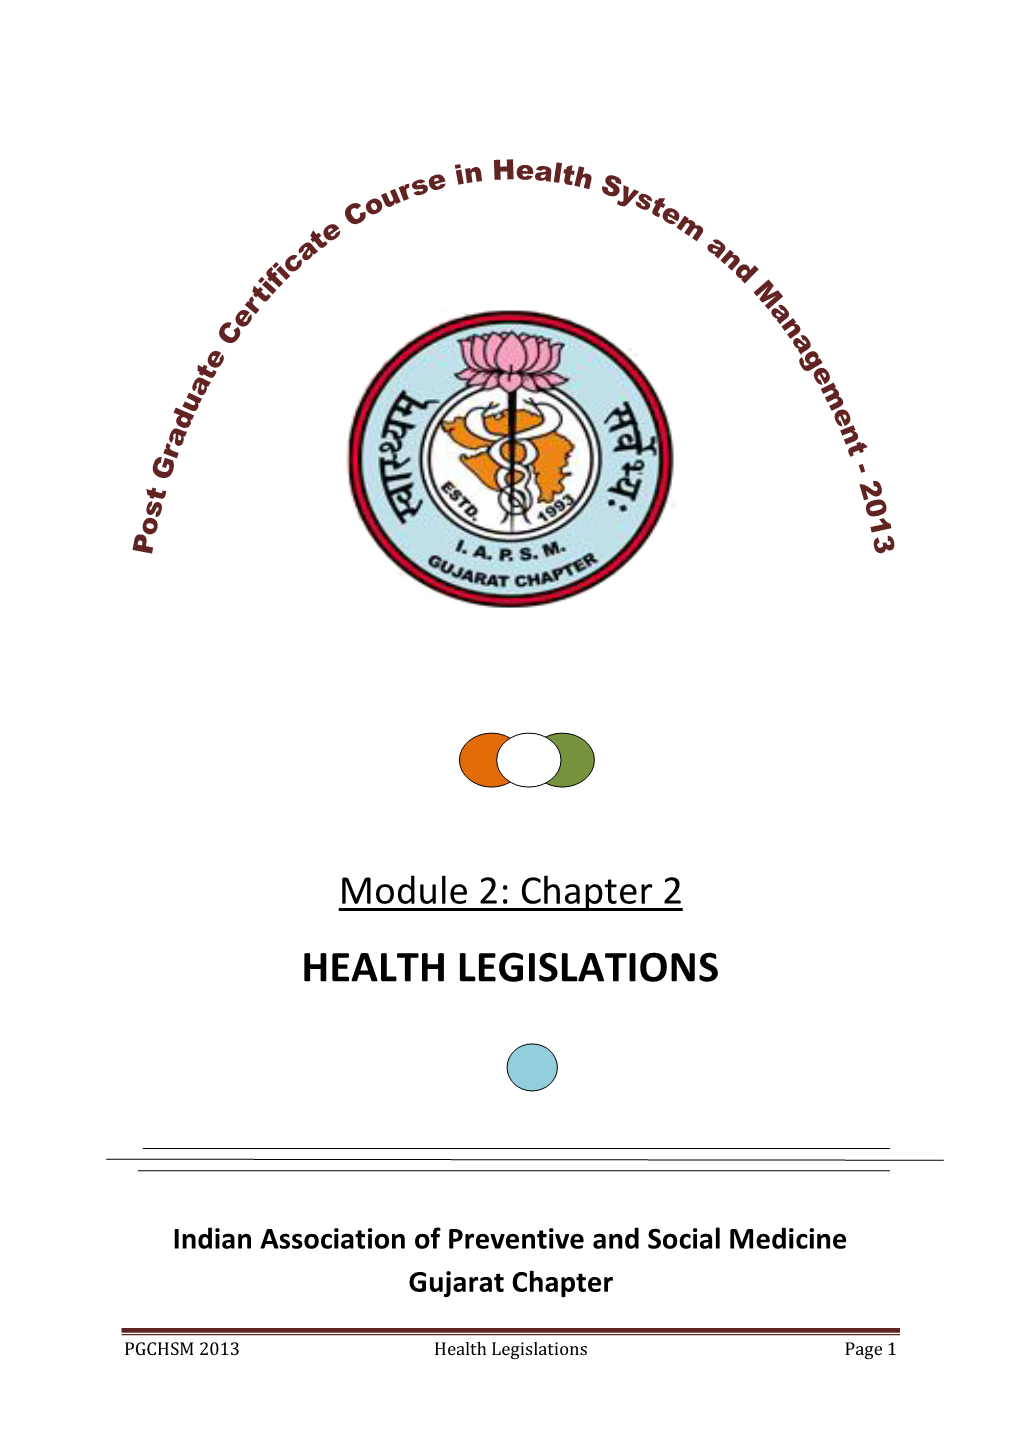 Module 2: Chapter 2 HEALTH LEGISLATIONS